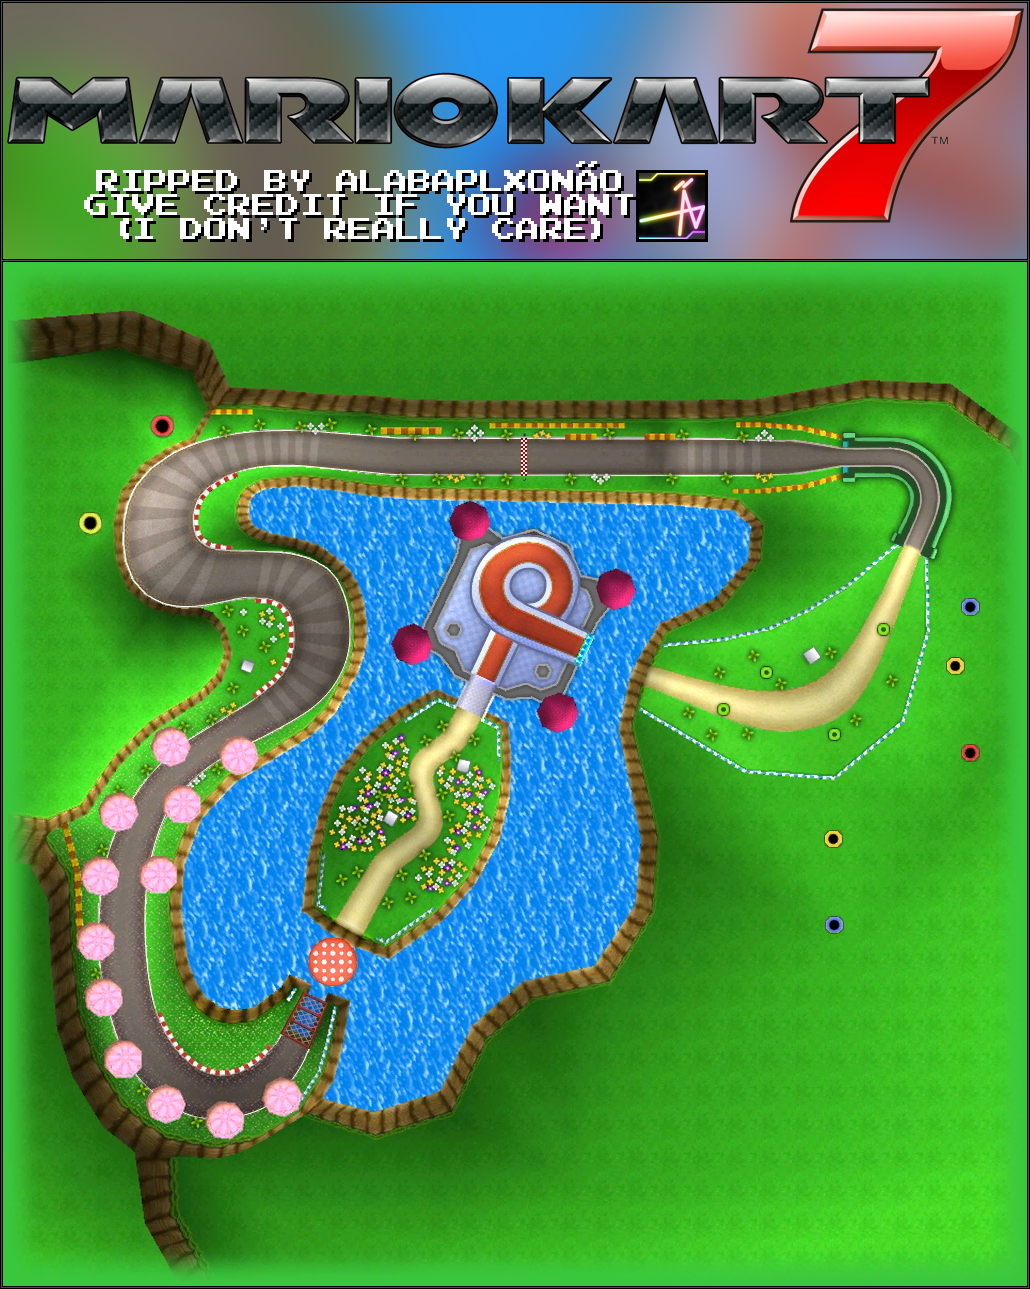 Evolution Of 3DS Mario Circuit Course In Mario Kart Games [2011-2019] 